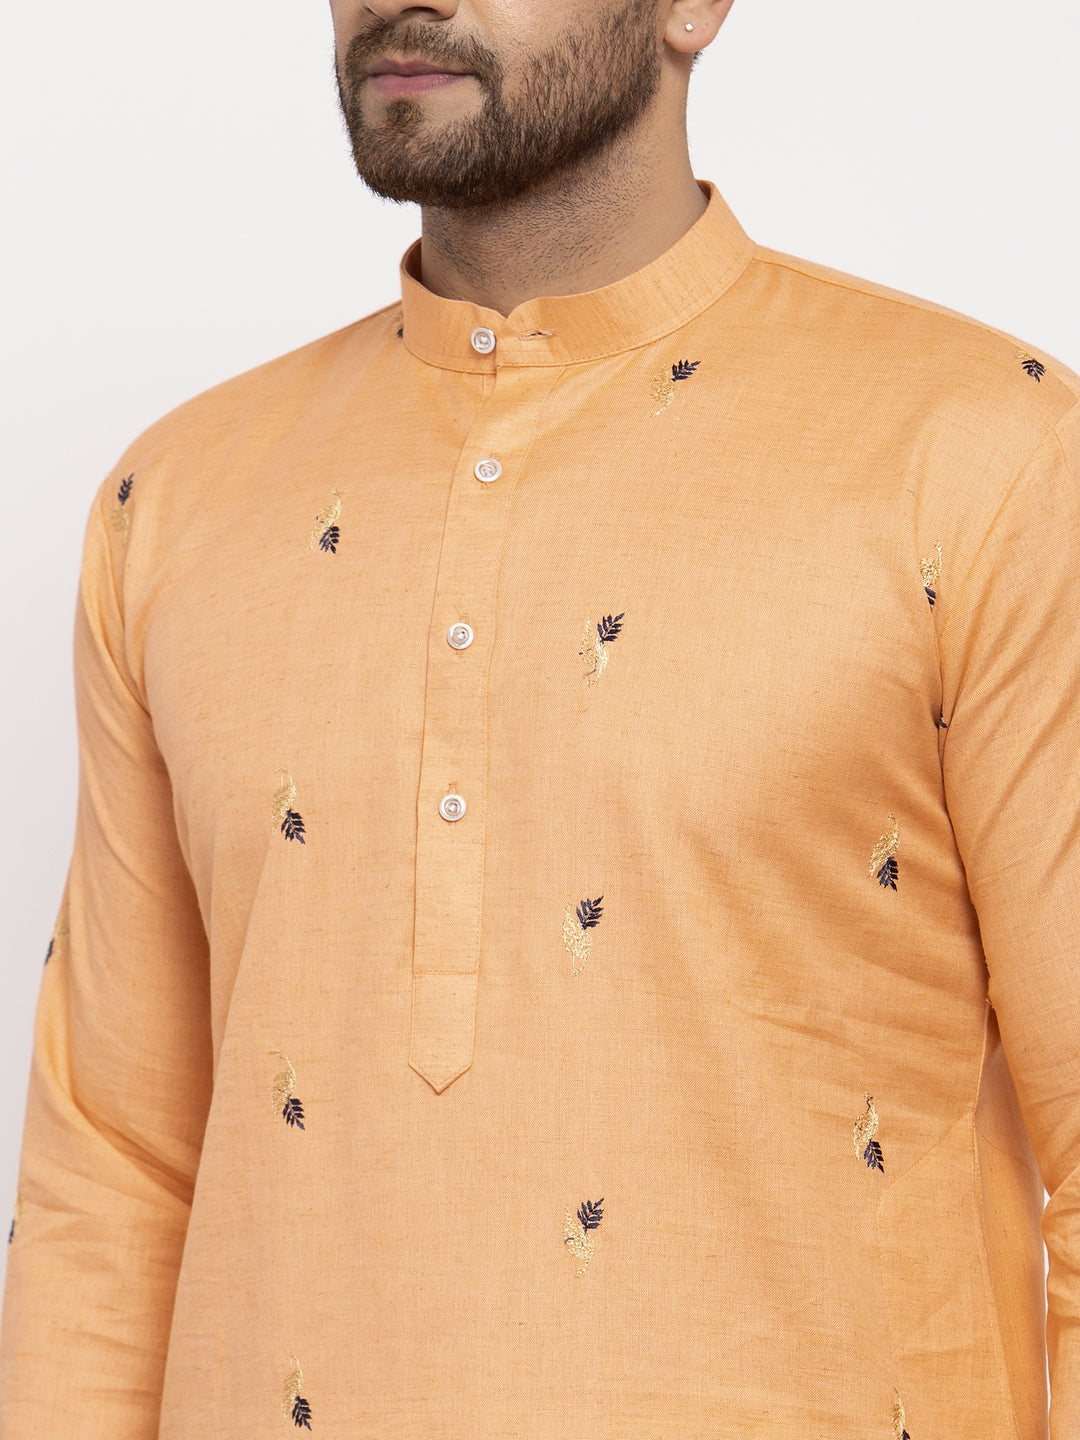 Jompers Men's Orange Printed Cotton Kurta Payjama Sets